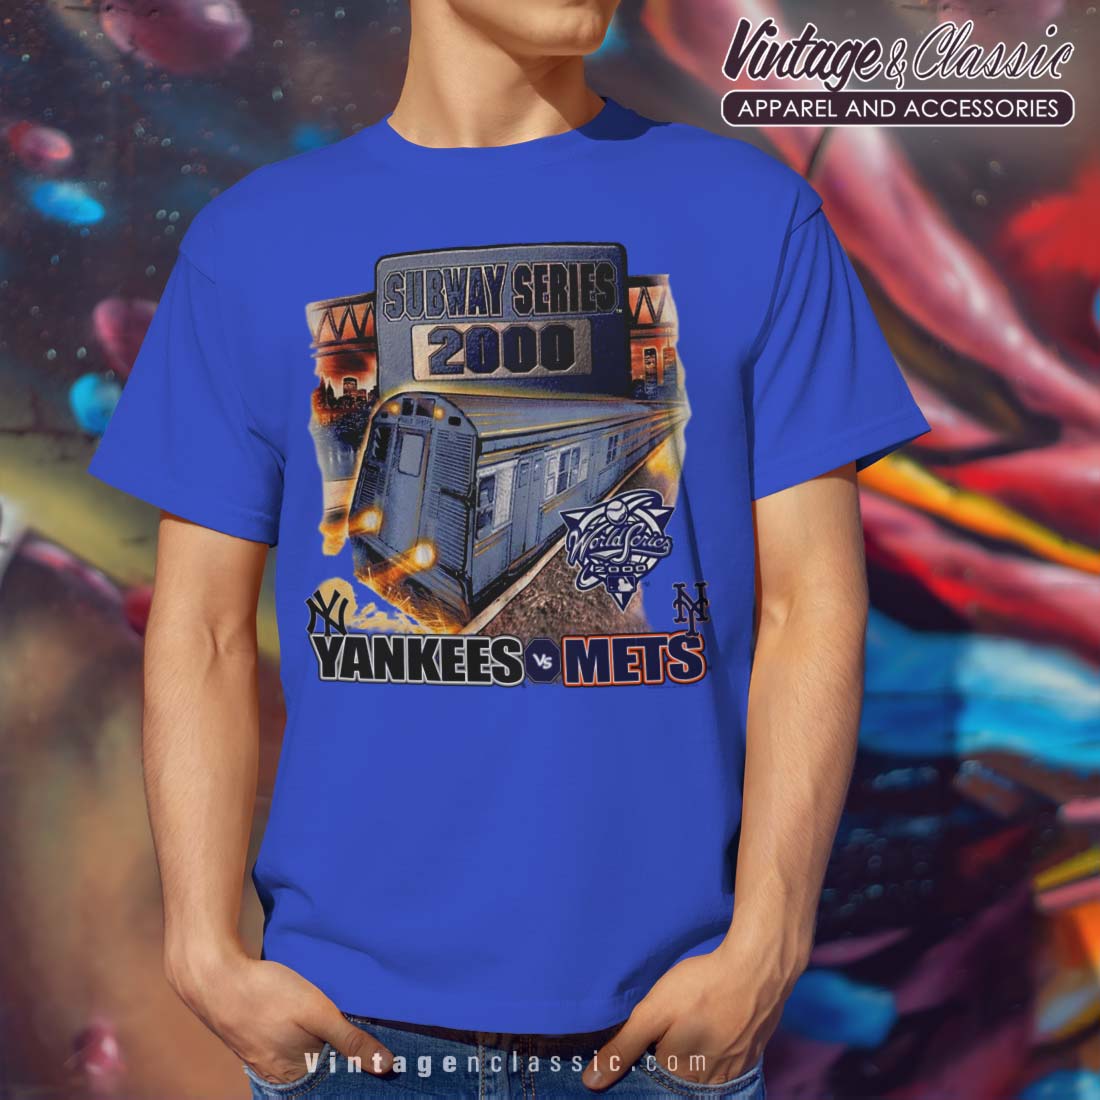 Subway Series Yankees and Mets Shirt - High-Quality Printed Brand